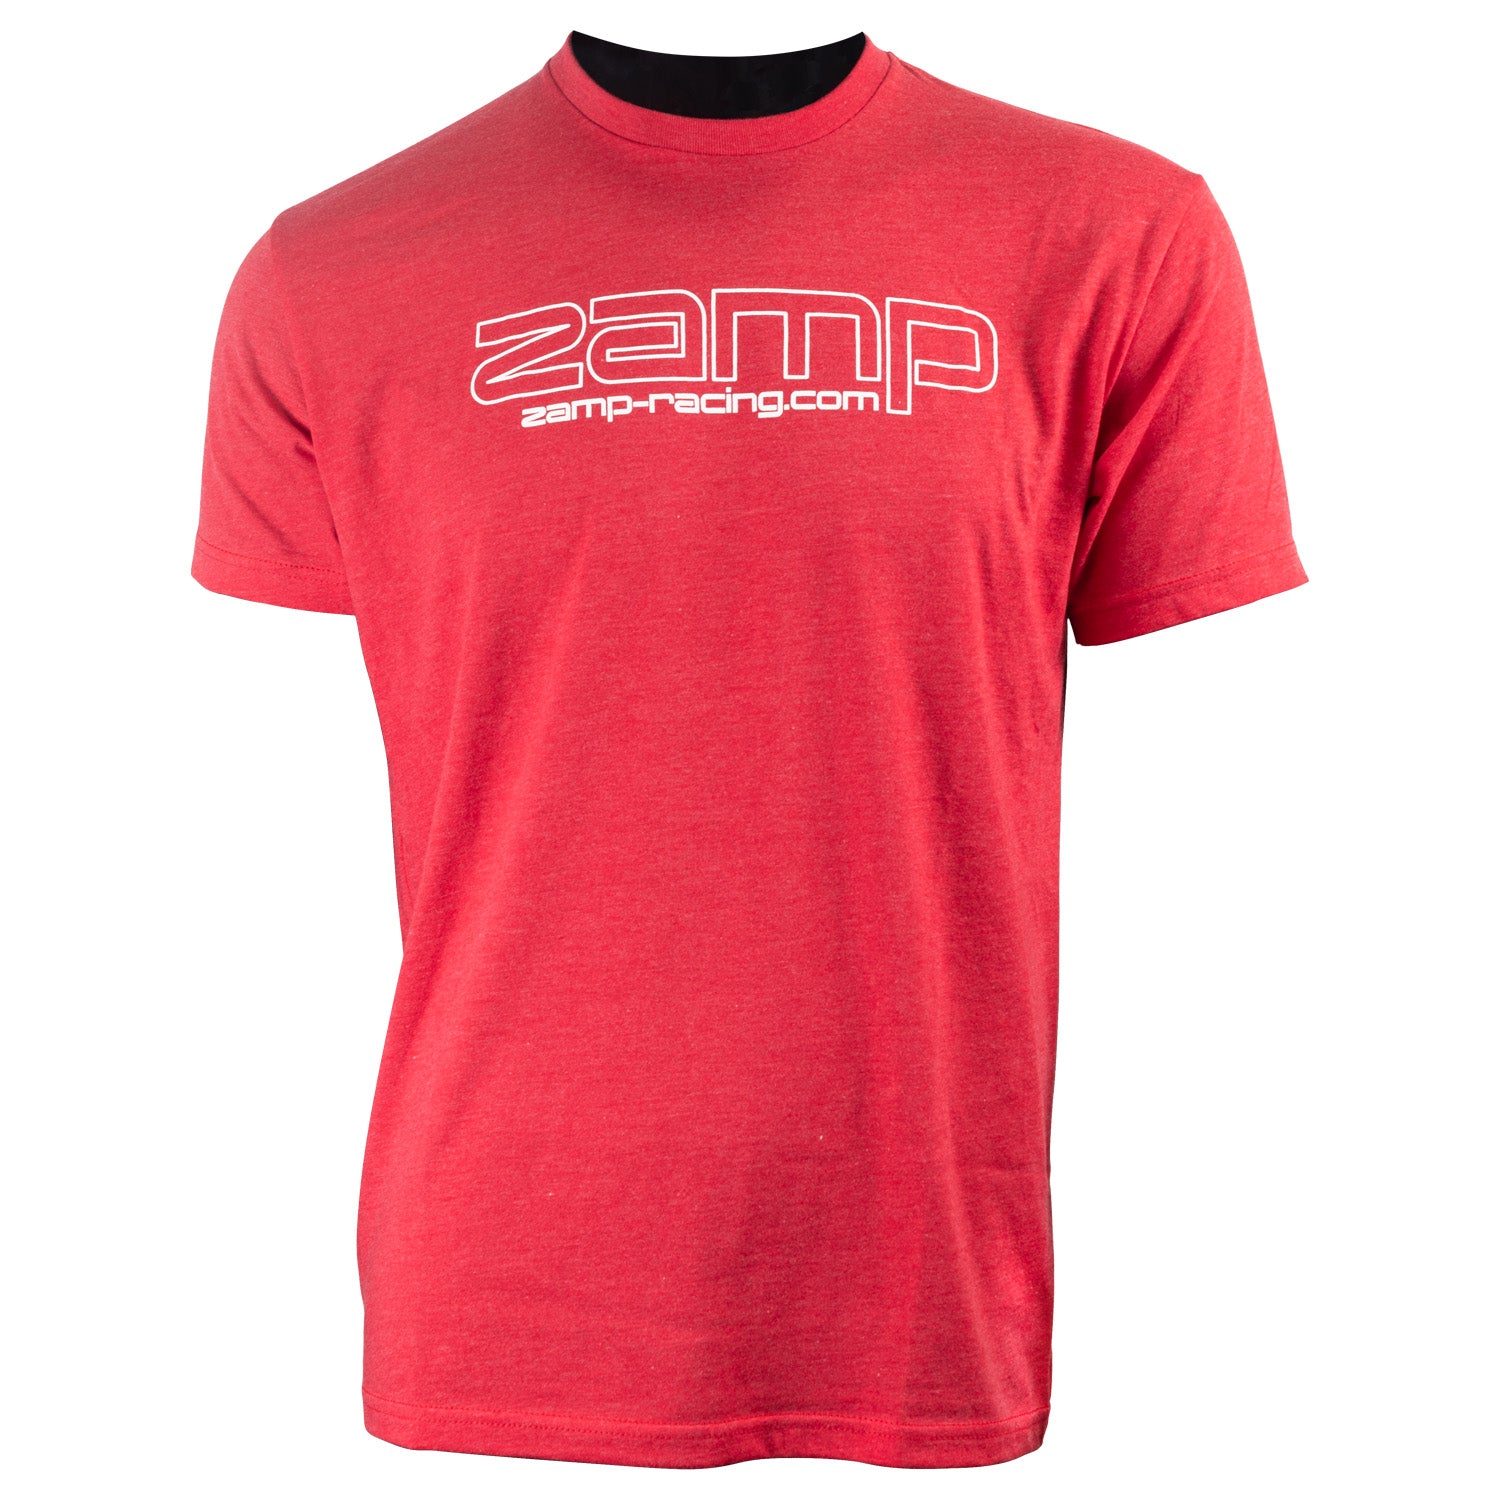 ZAMP Racing T-Shirt Red Medium N002002M